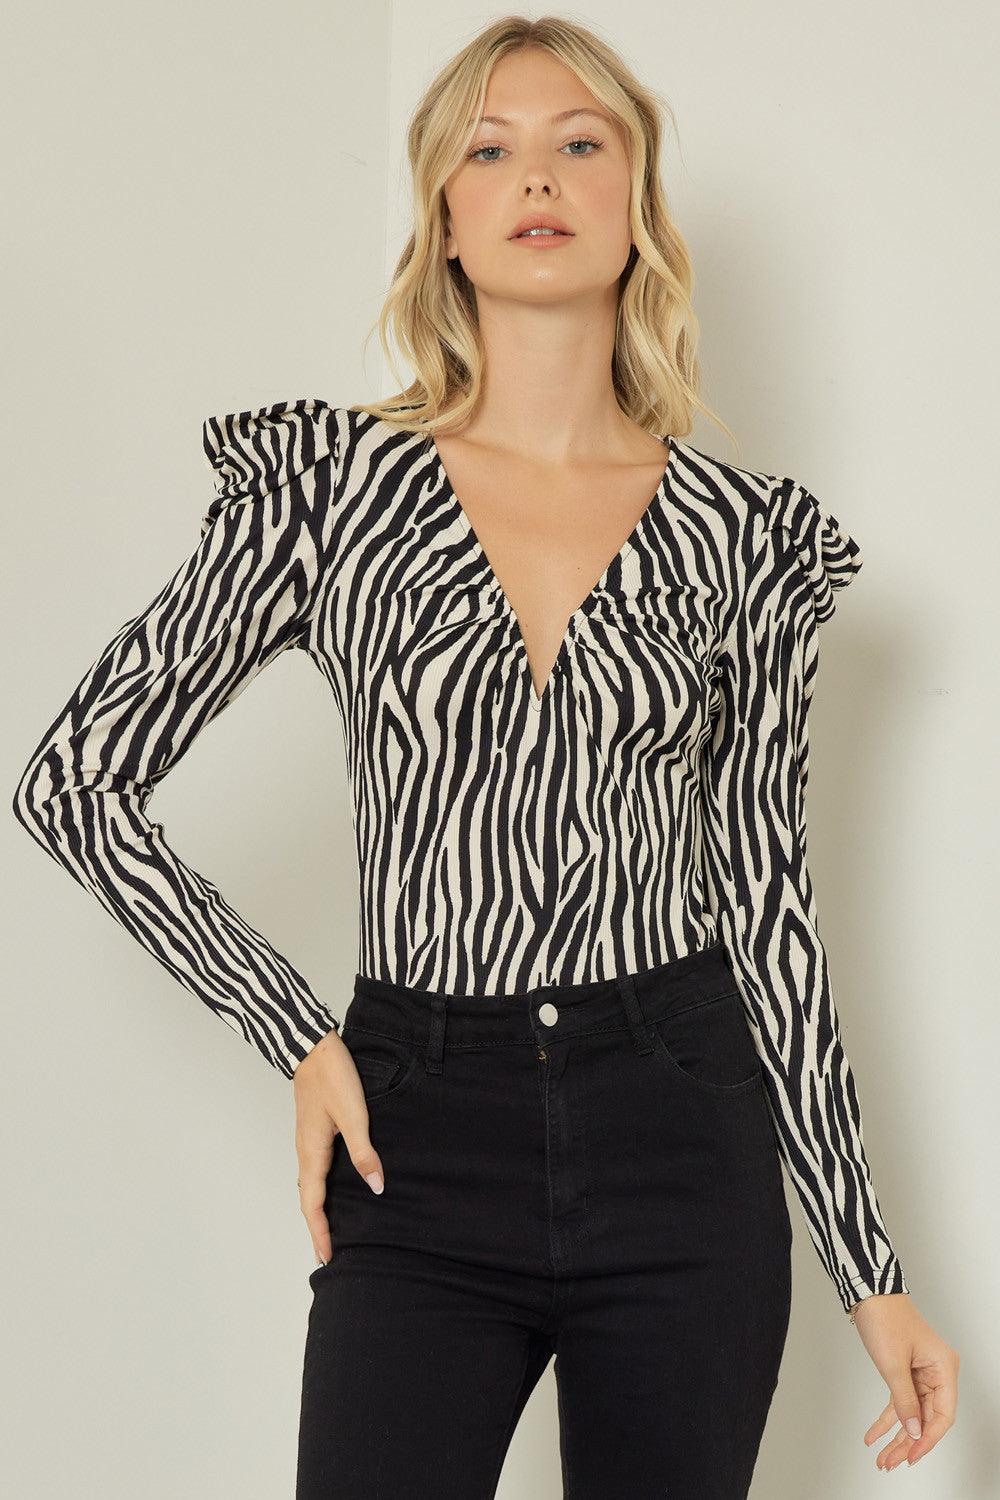 Zebra print v-neck long sleeve bodysuit - RK Collections Boutique